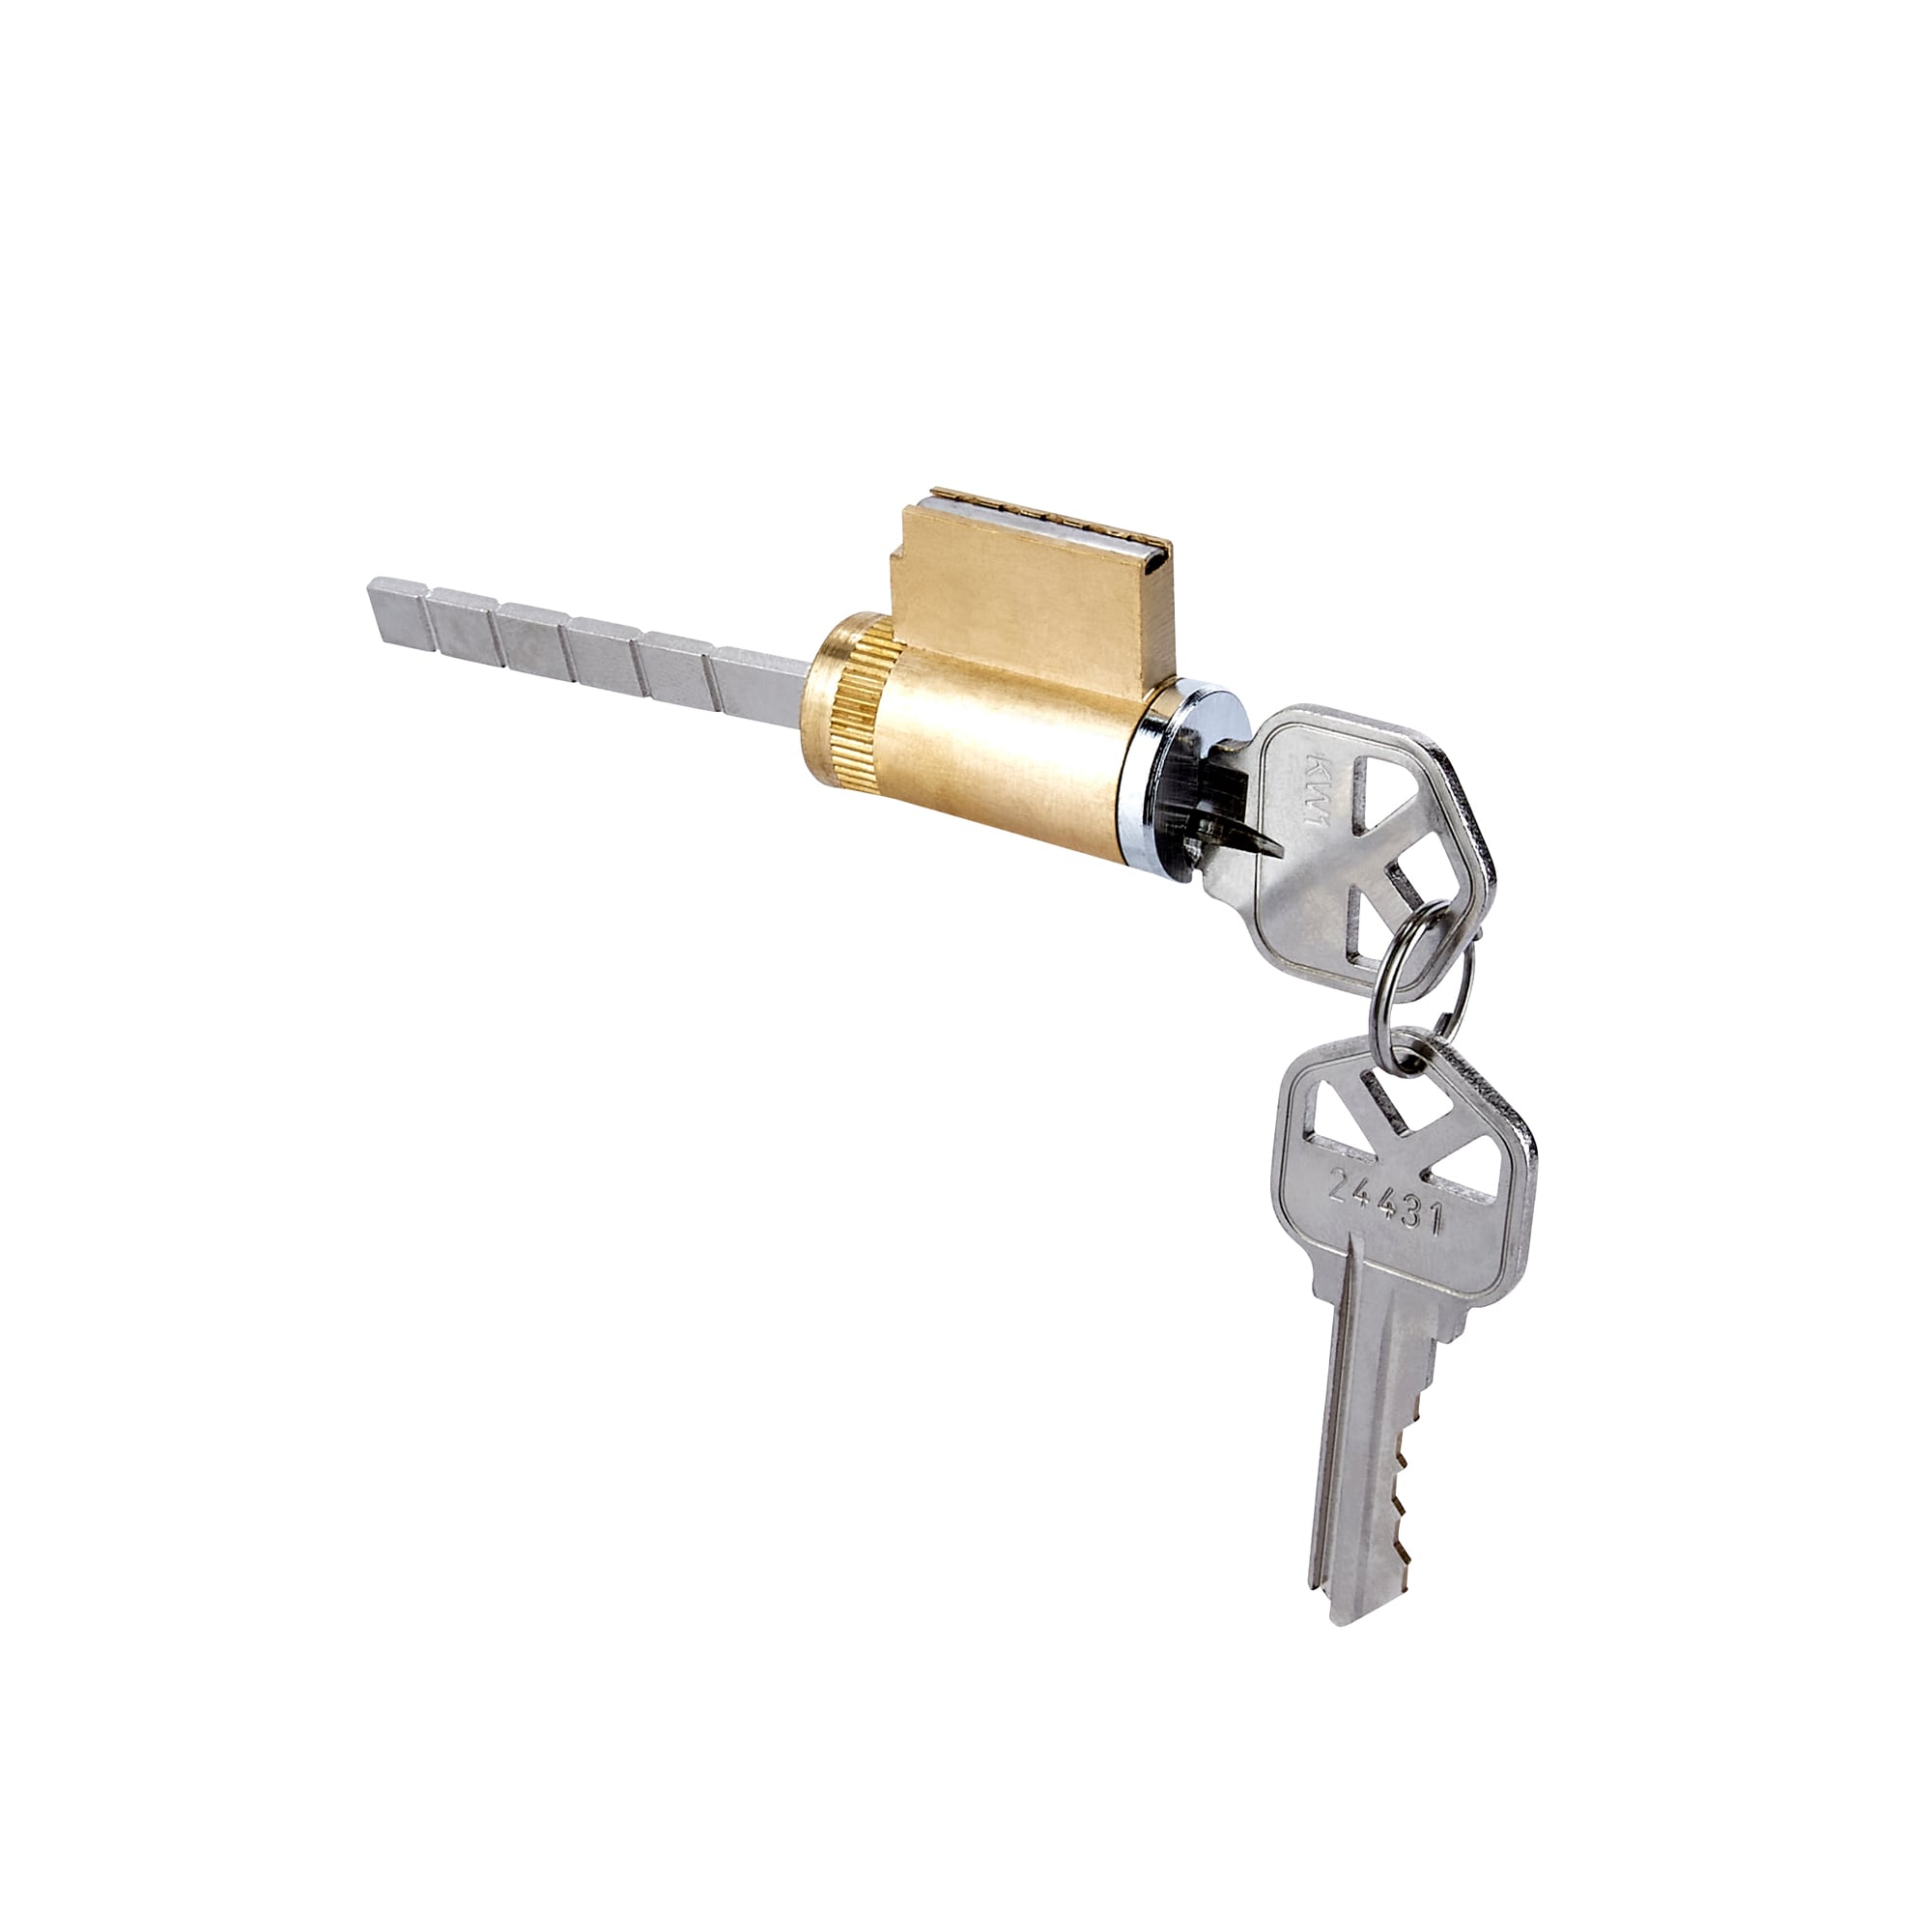 Prime-Line Products E 2103 Sliding Glass Door Cylinder Lock Schlage Keyway